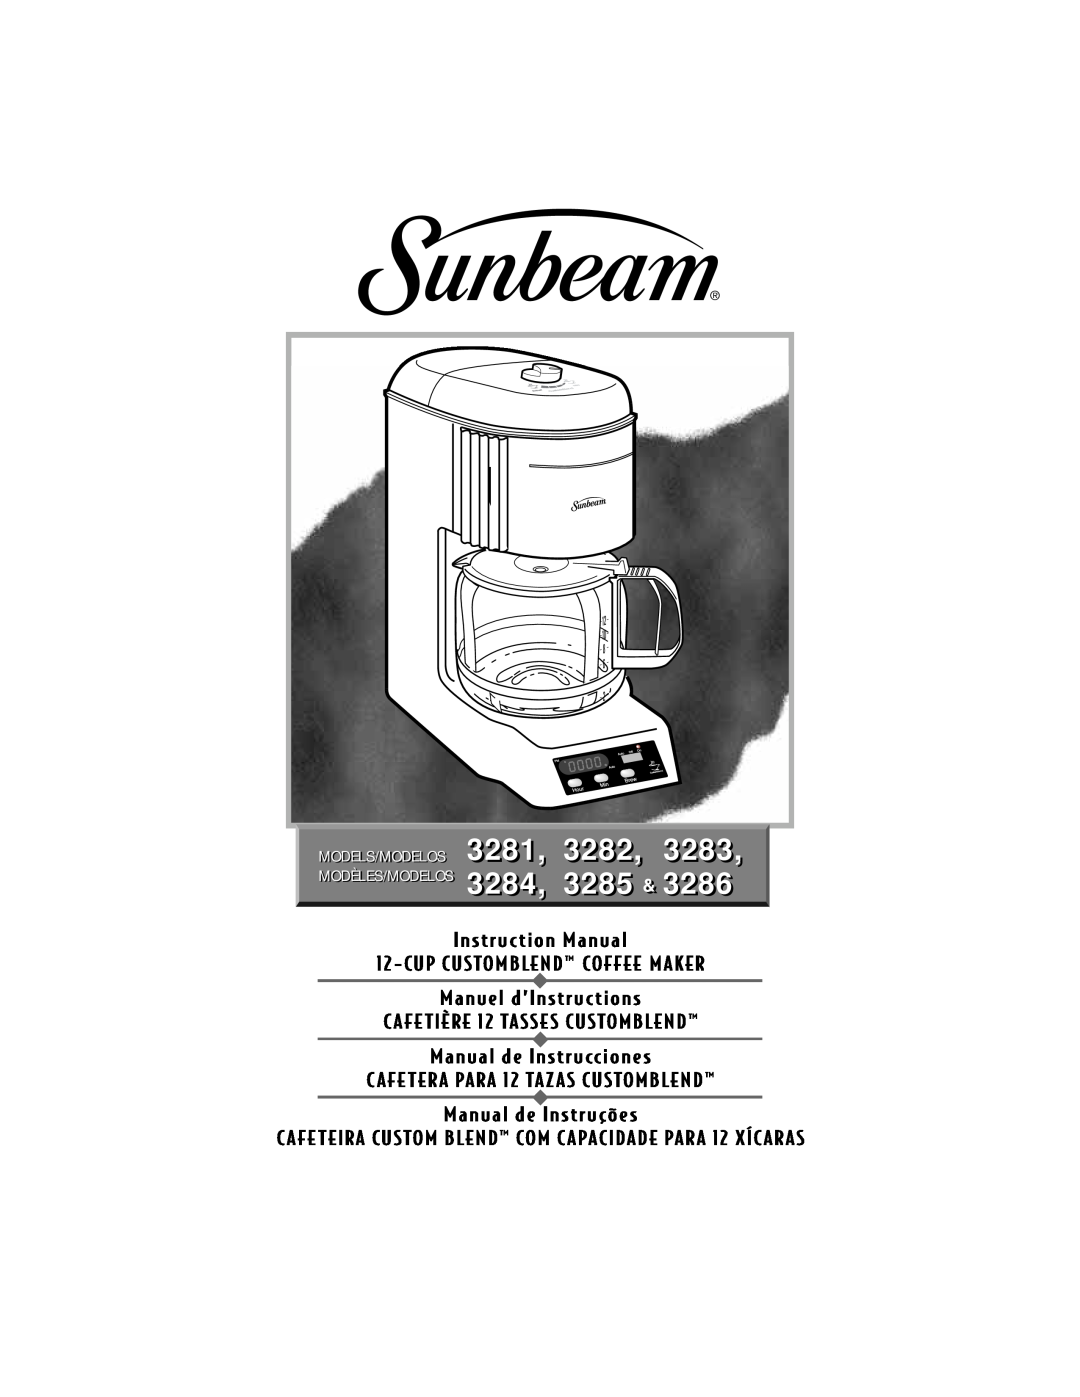 Sunbeam 32863281 instruction manual Cup Customblendª Coffee Maker, Manuel dÕInstructions, Manual de Instrucciones 